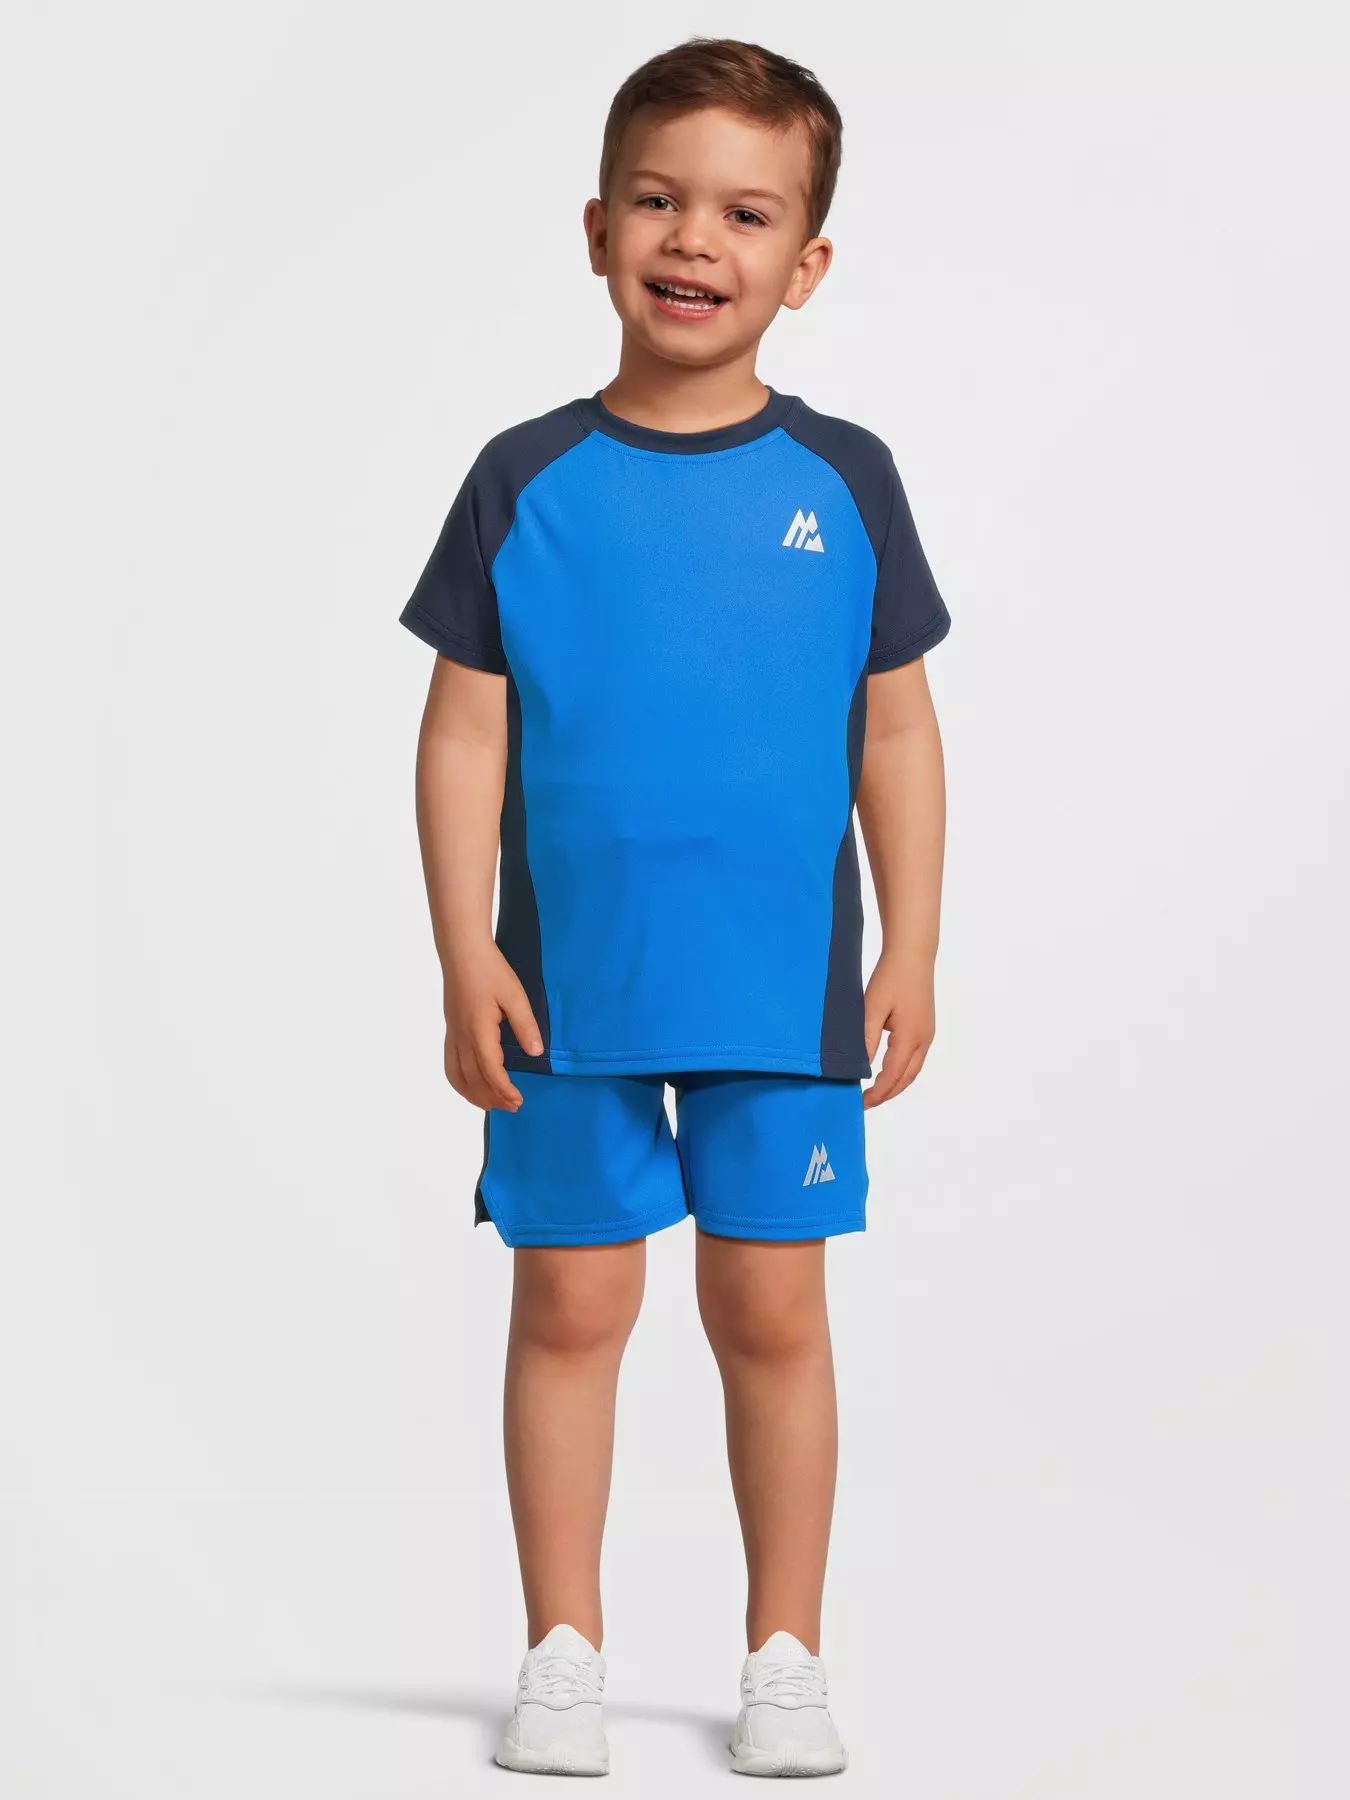 Reflective Summer Short And Sweatshirt Set For Boys Short Sleeve T